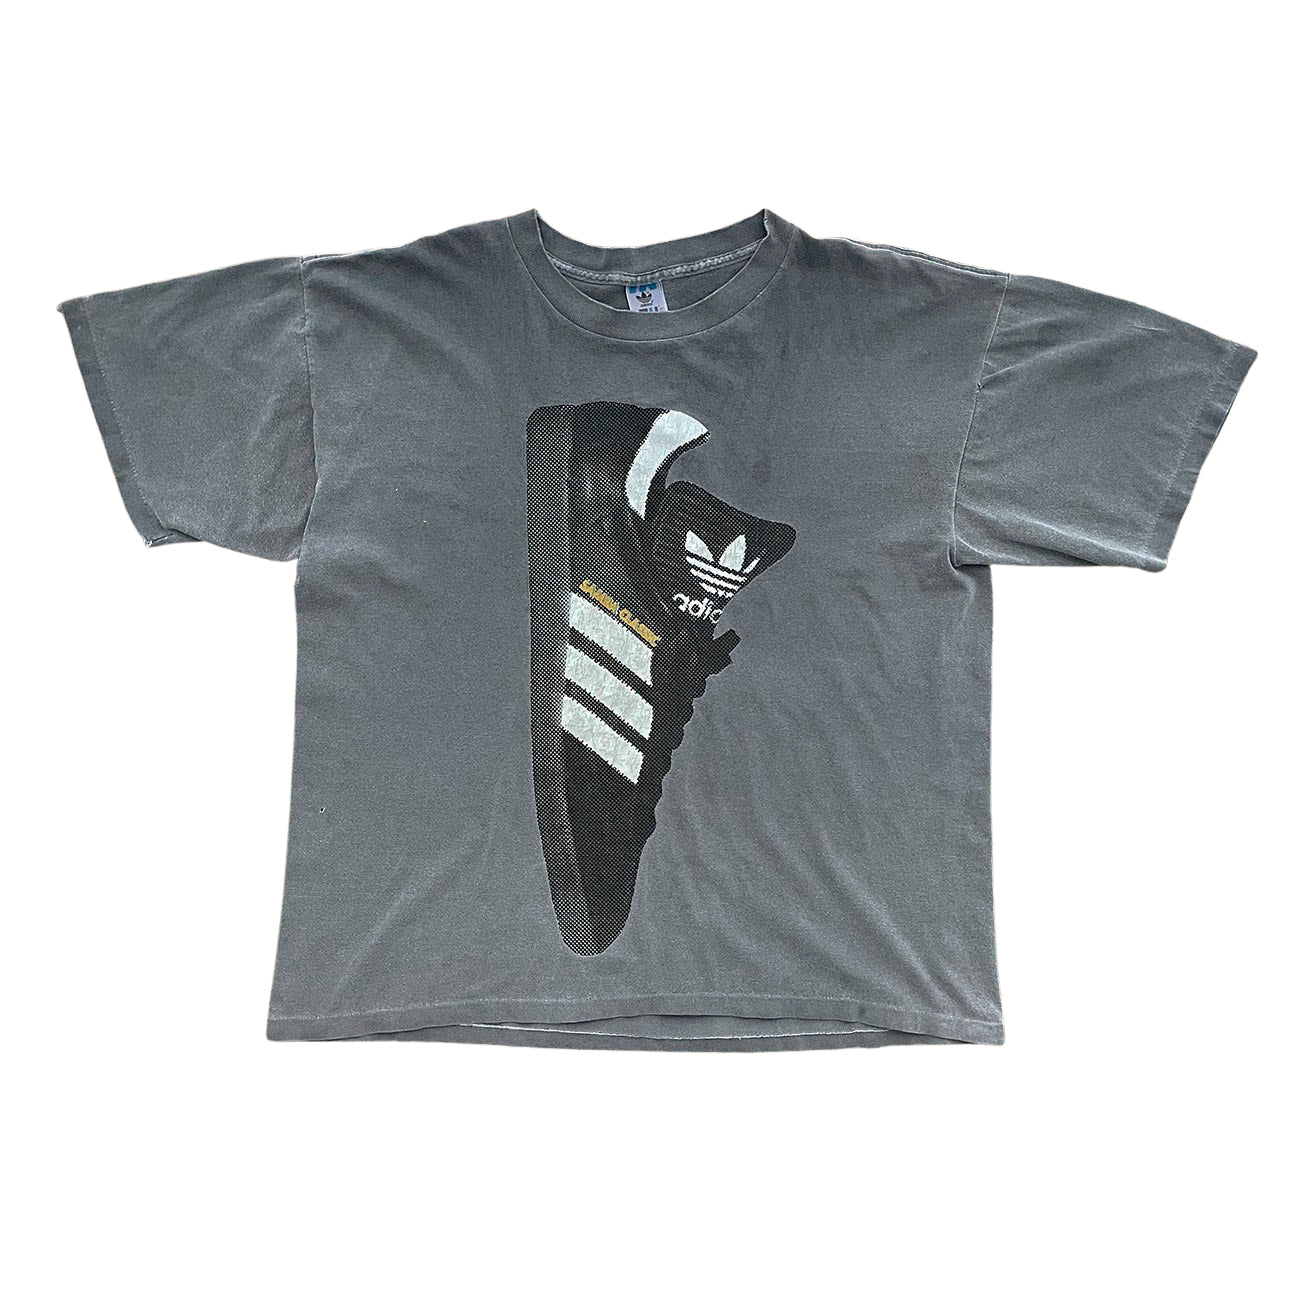 Adidas Giant Samba T-Shirt - L